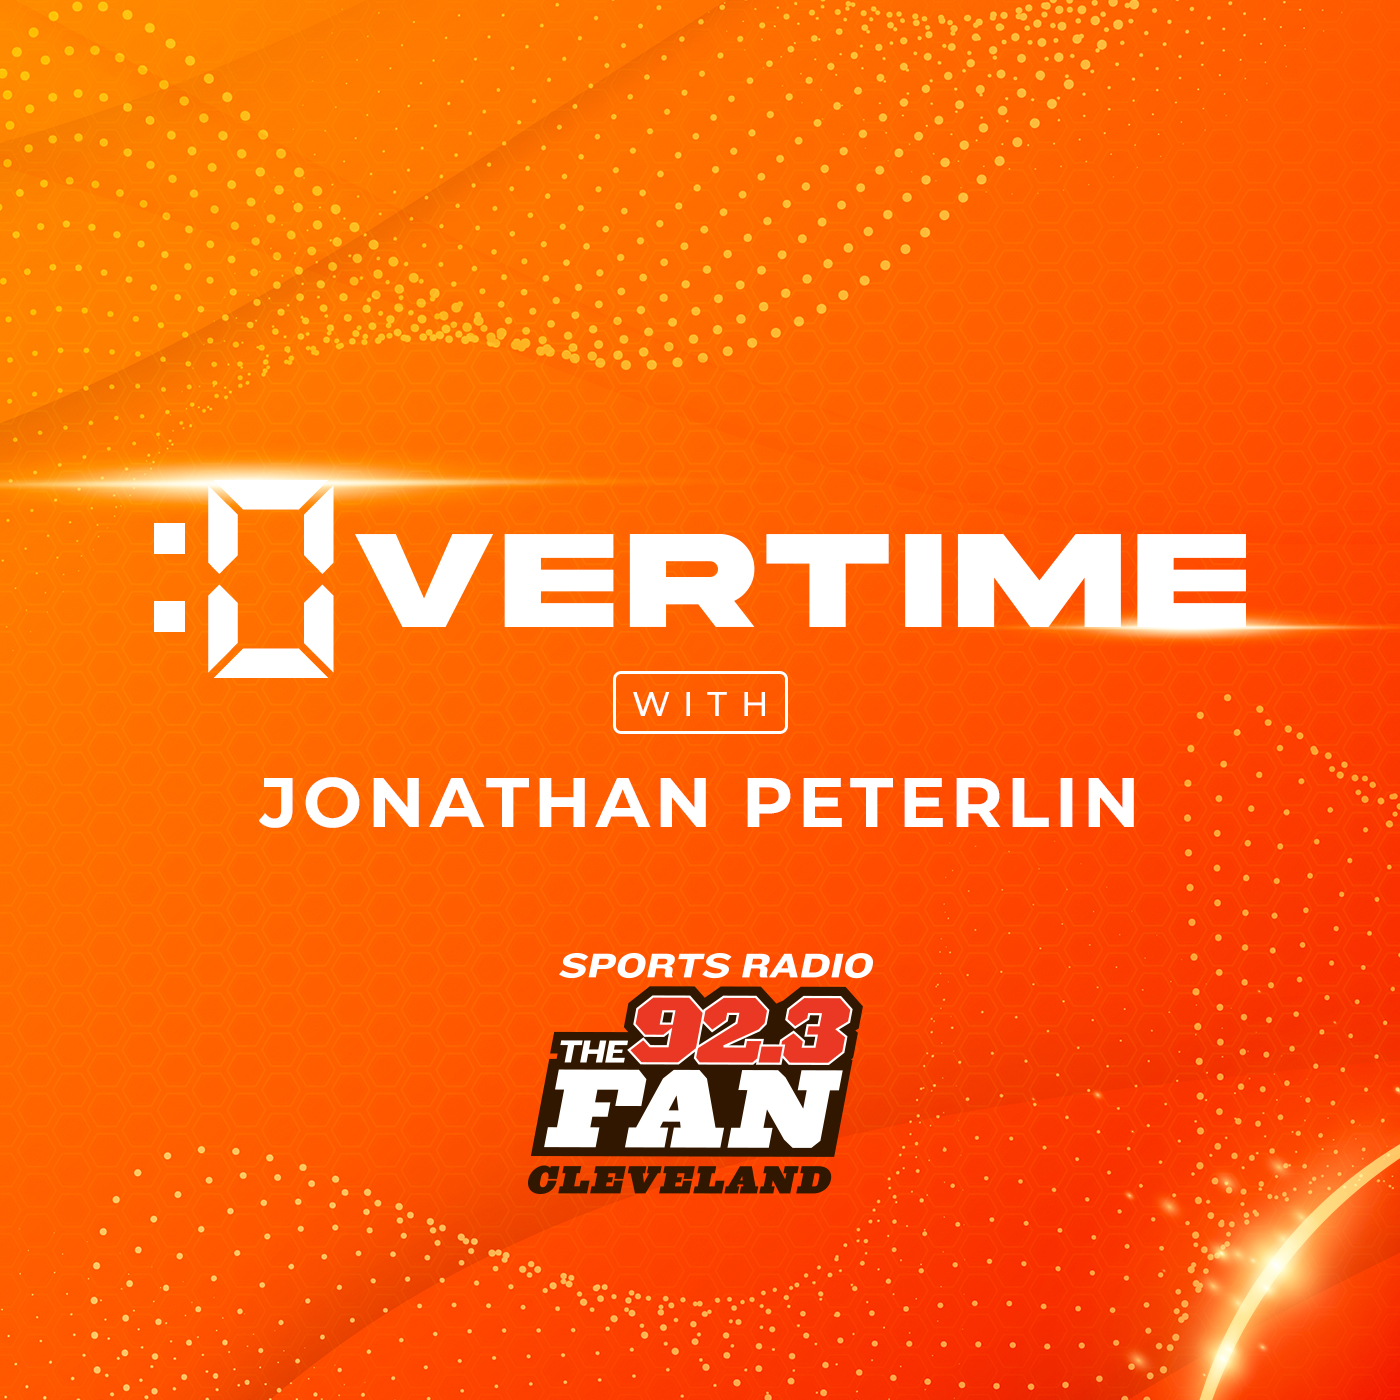 Overtime with Jonathan Peterlin